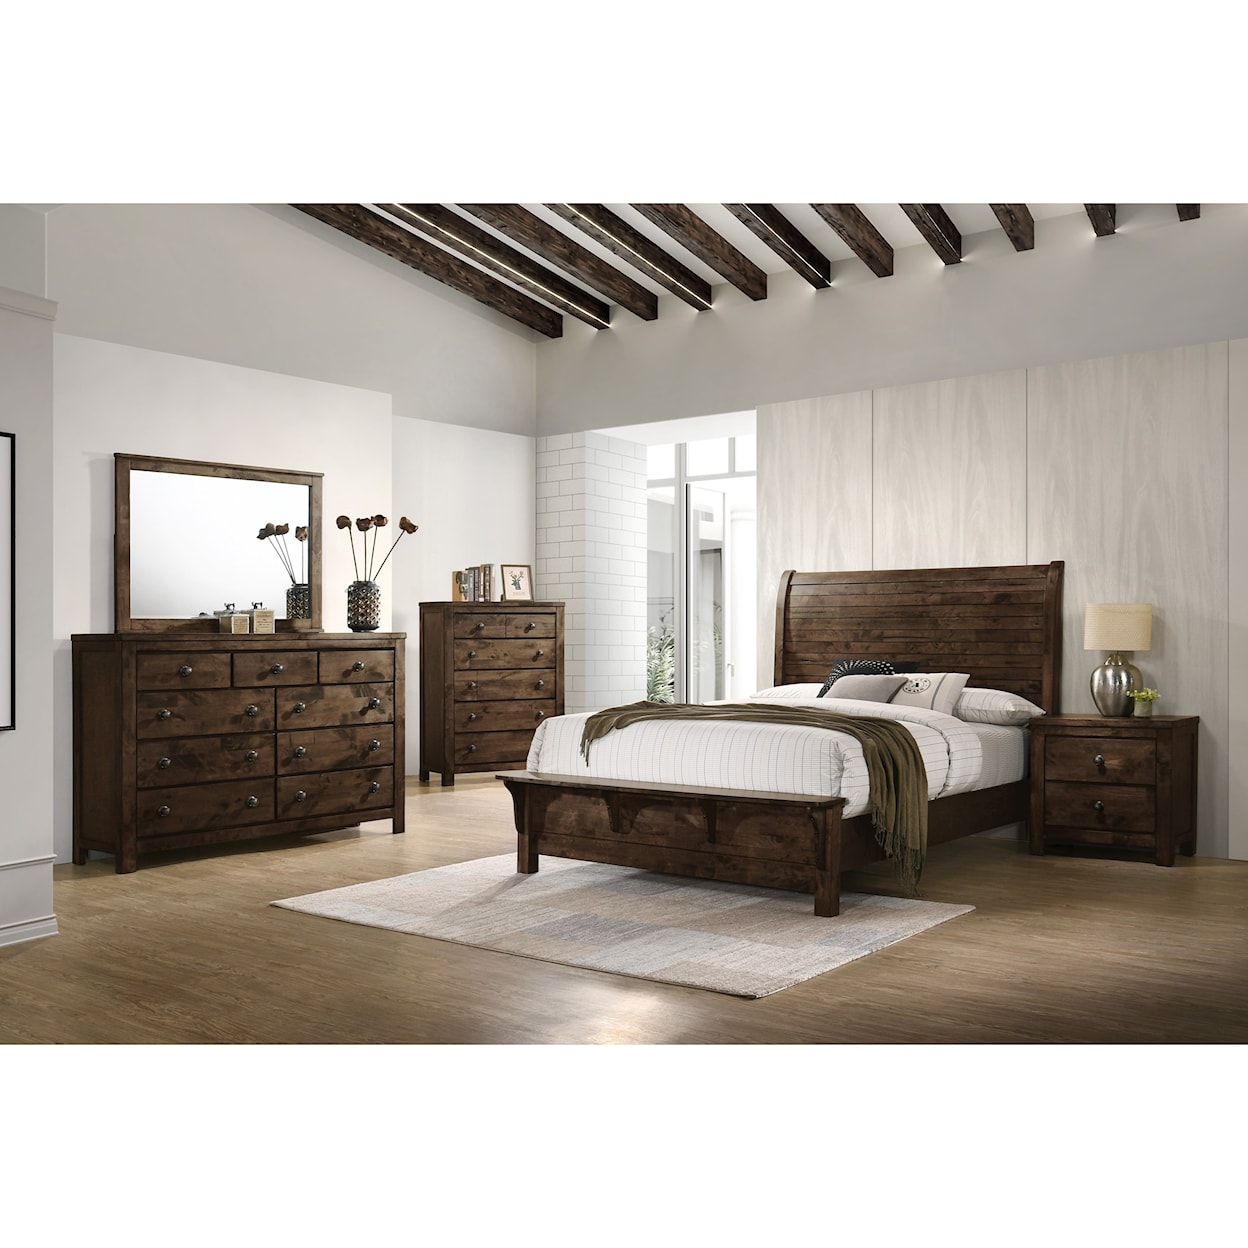 New Classic Furniture Blue Ridge California King Bedroom Group